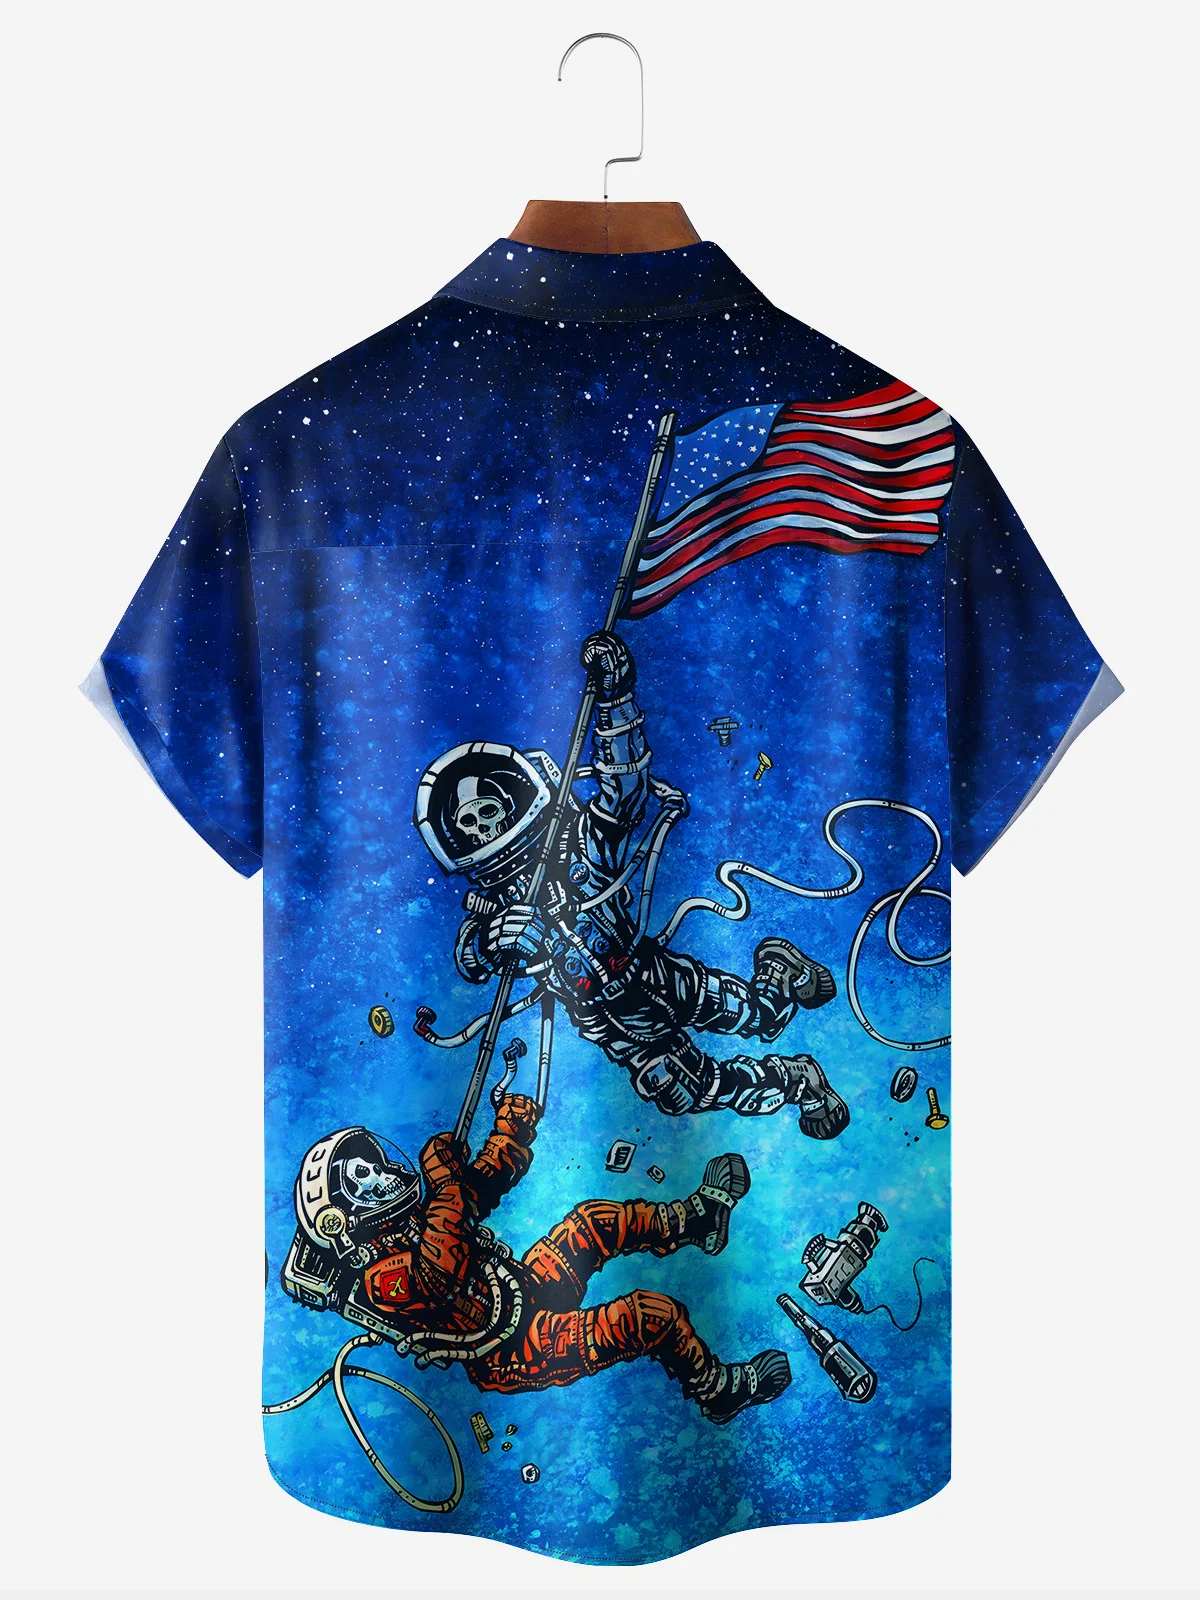 Space Race Shirt By David Lozeau